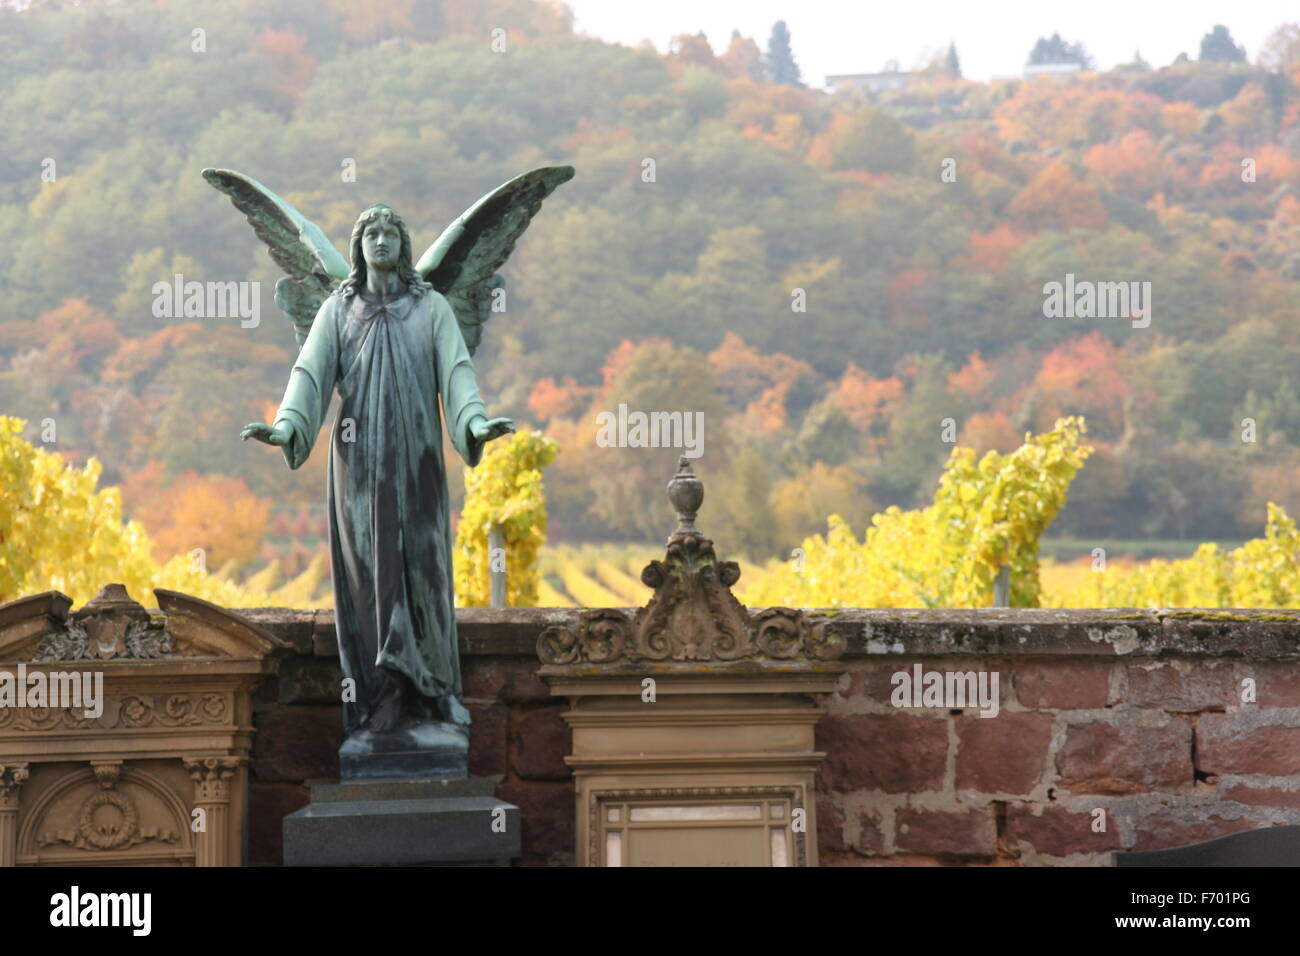 Cemetery angel, Germany. Stock Photo